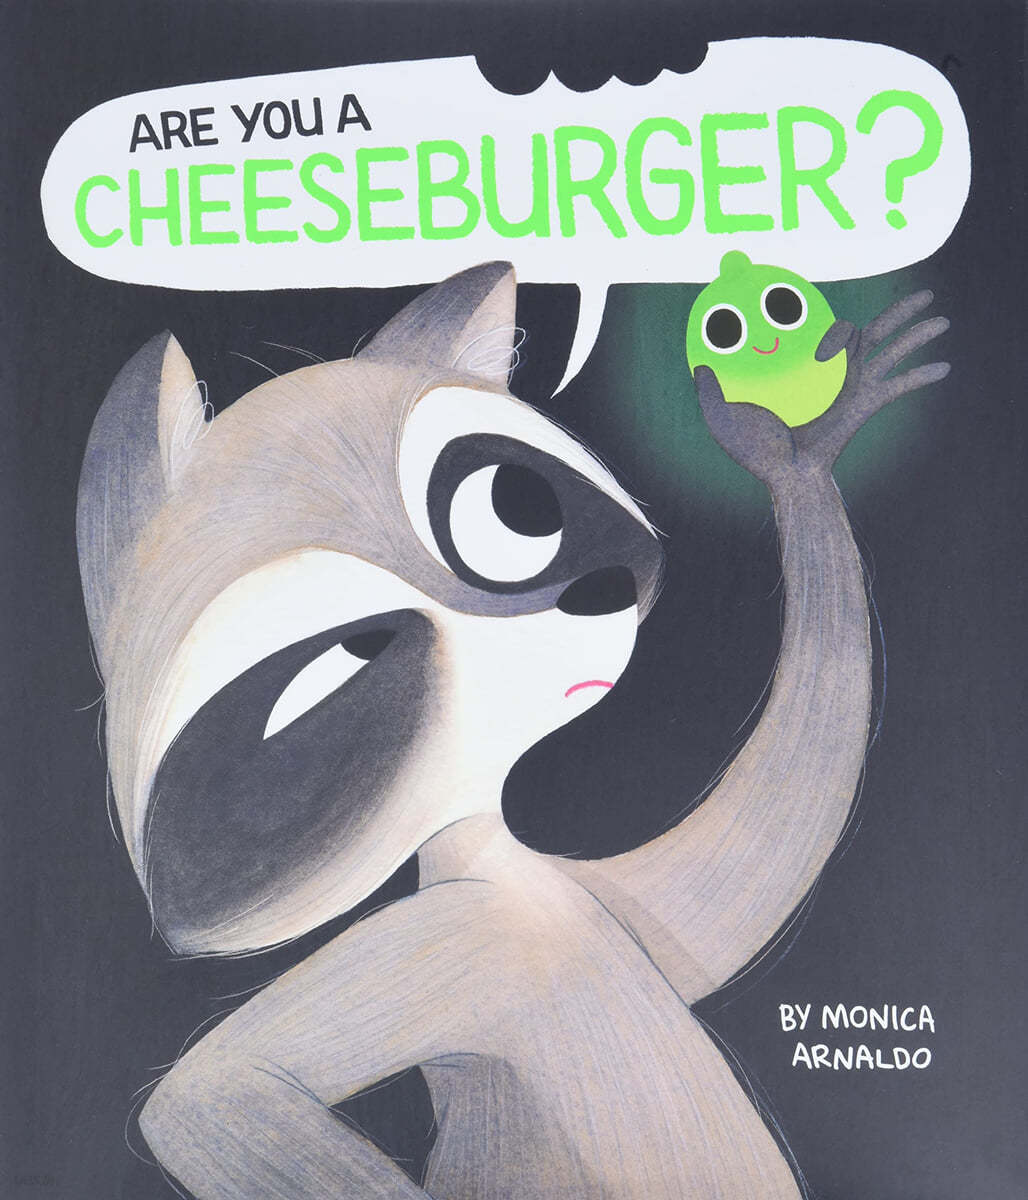 Are you a cheeseburger?